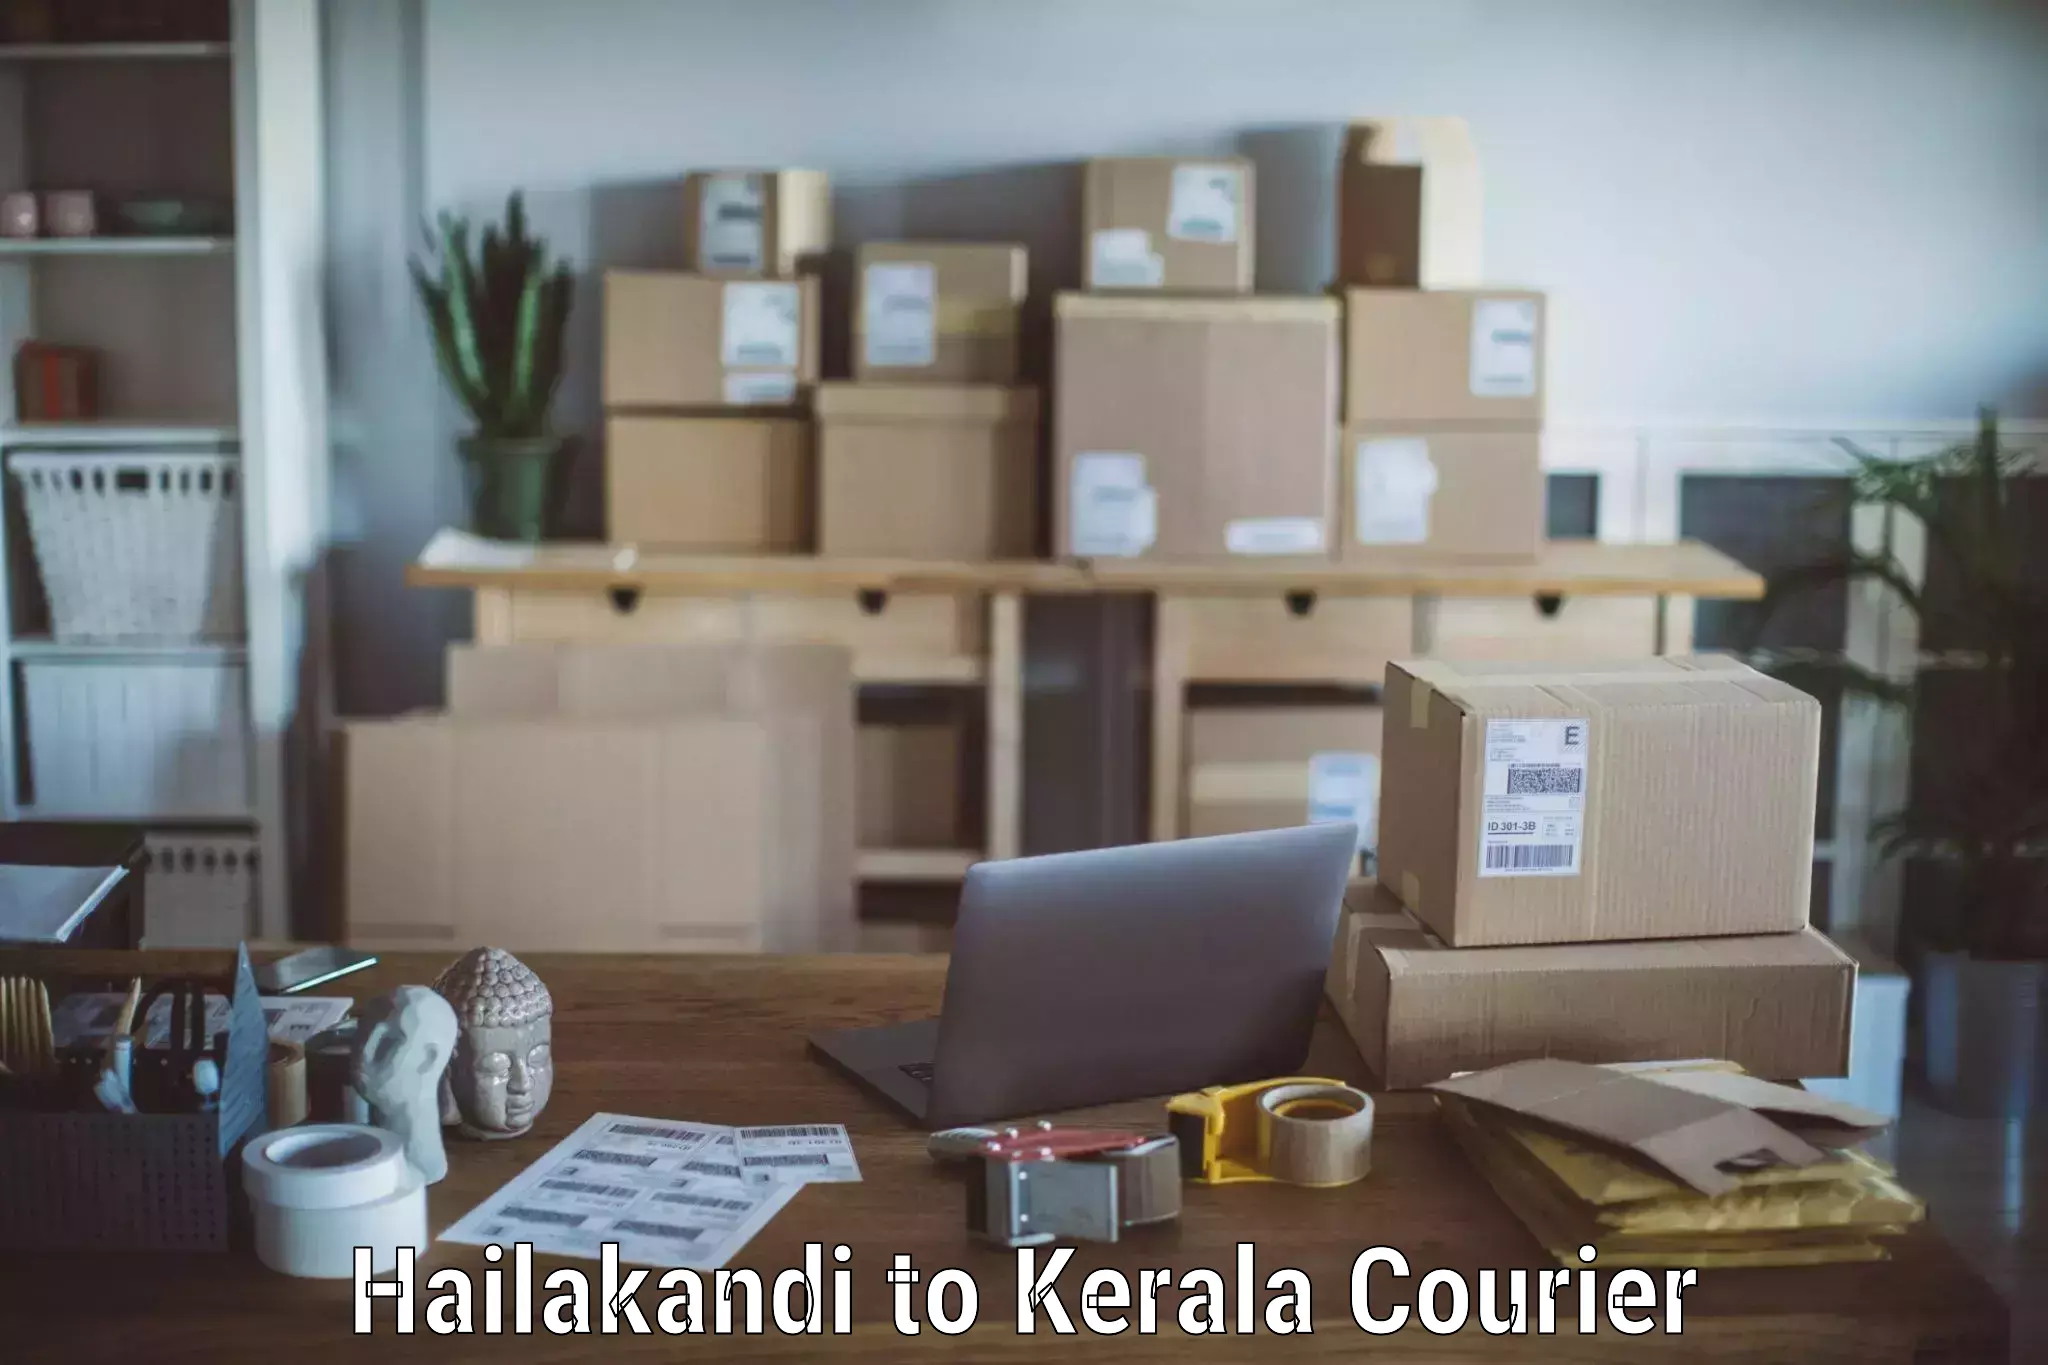 Professional moving company Hailakandi to Kerala